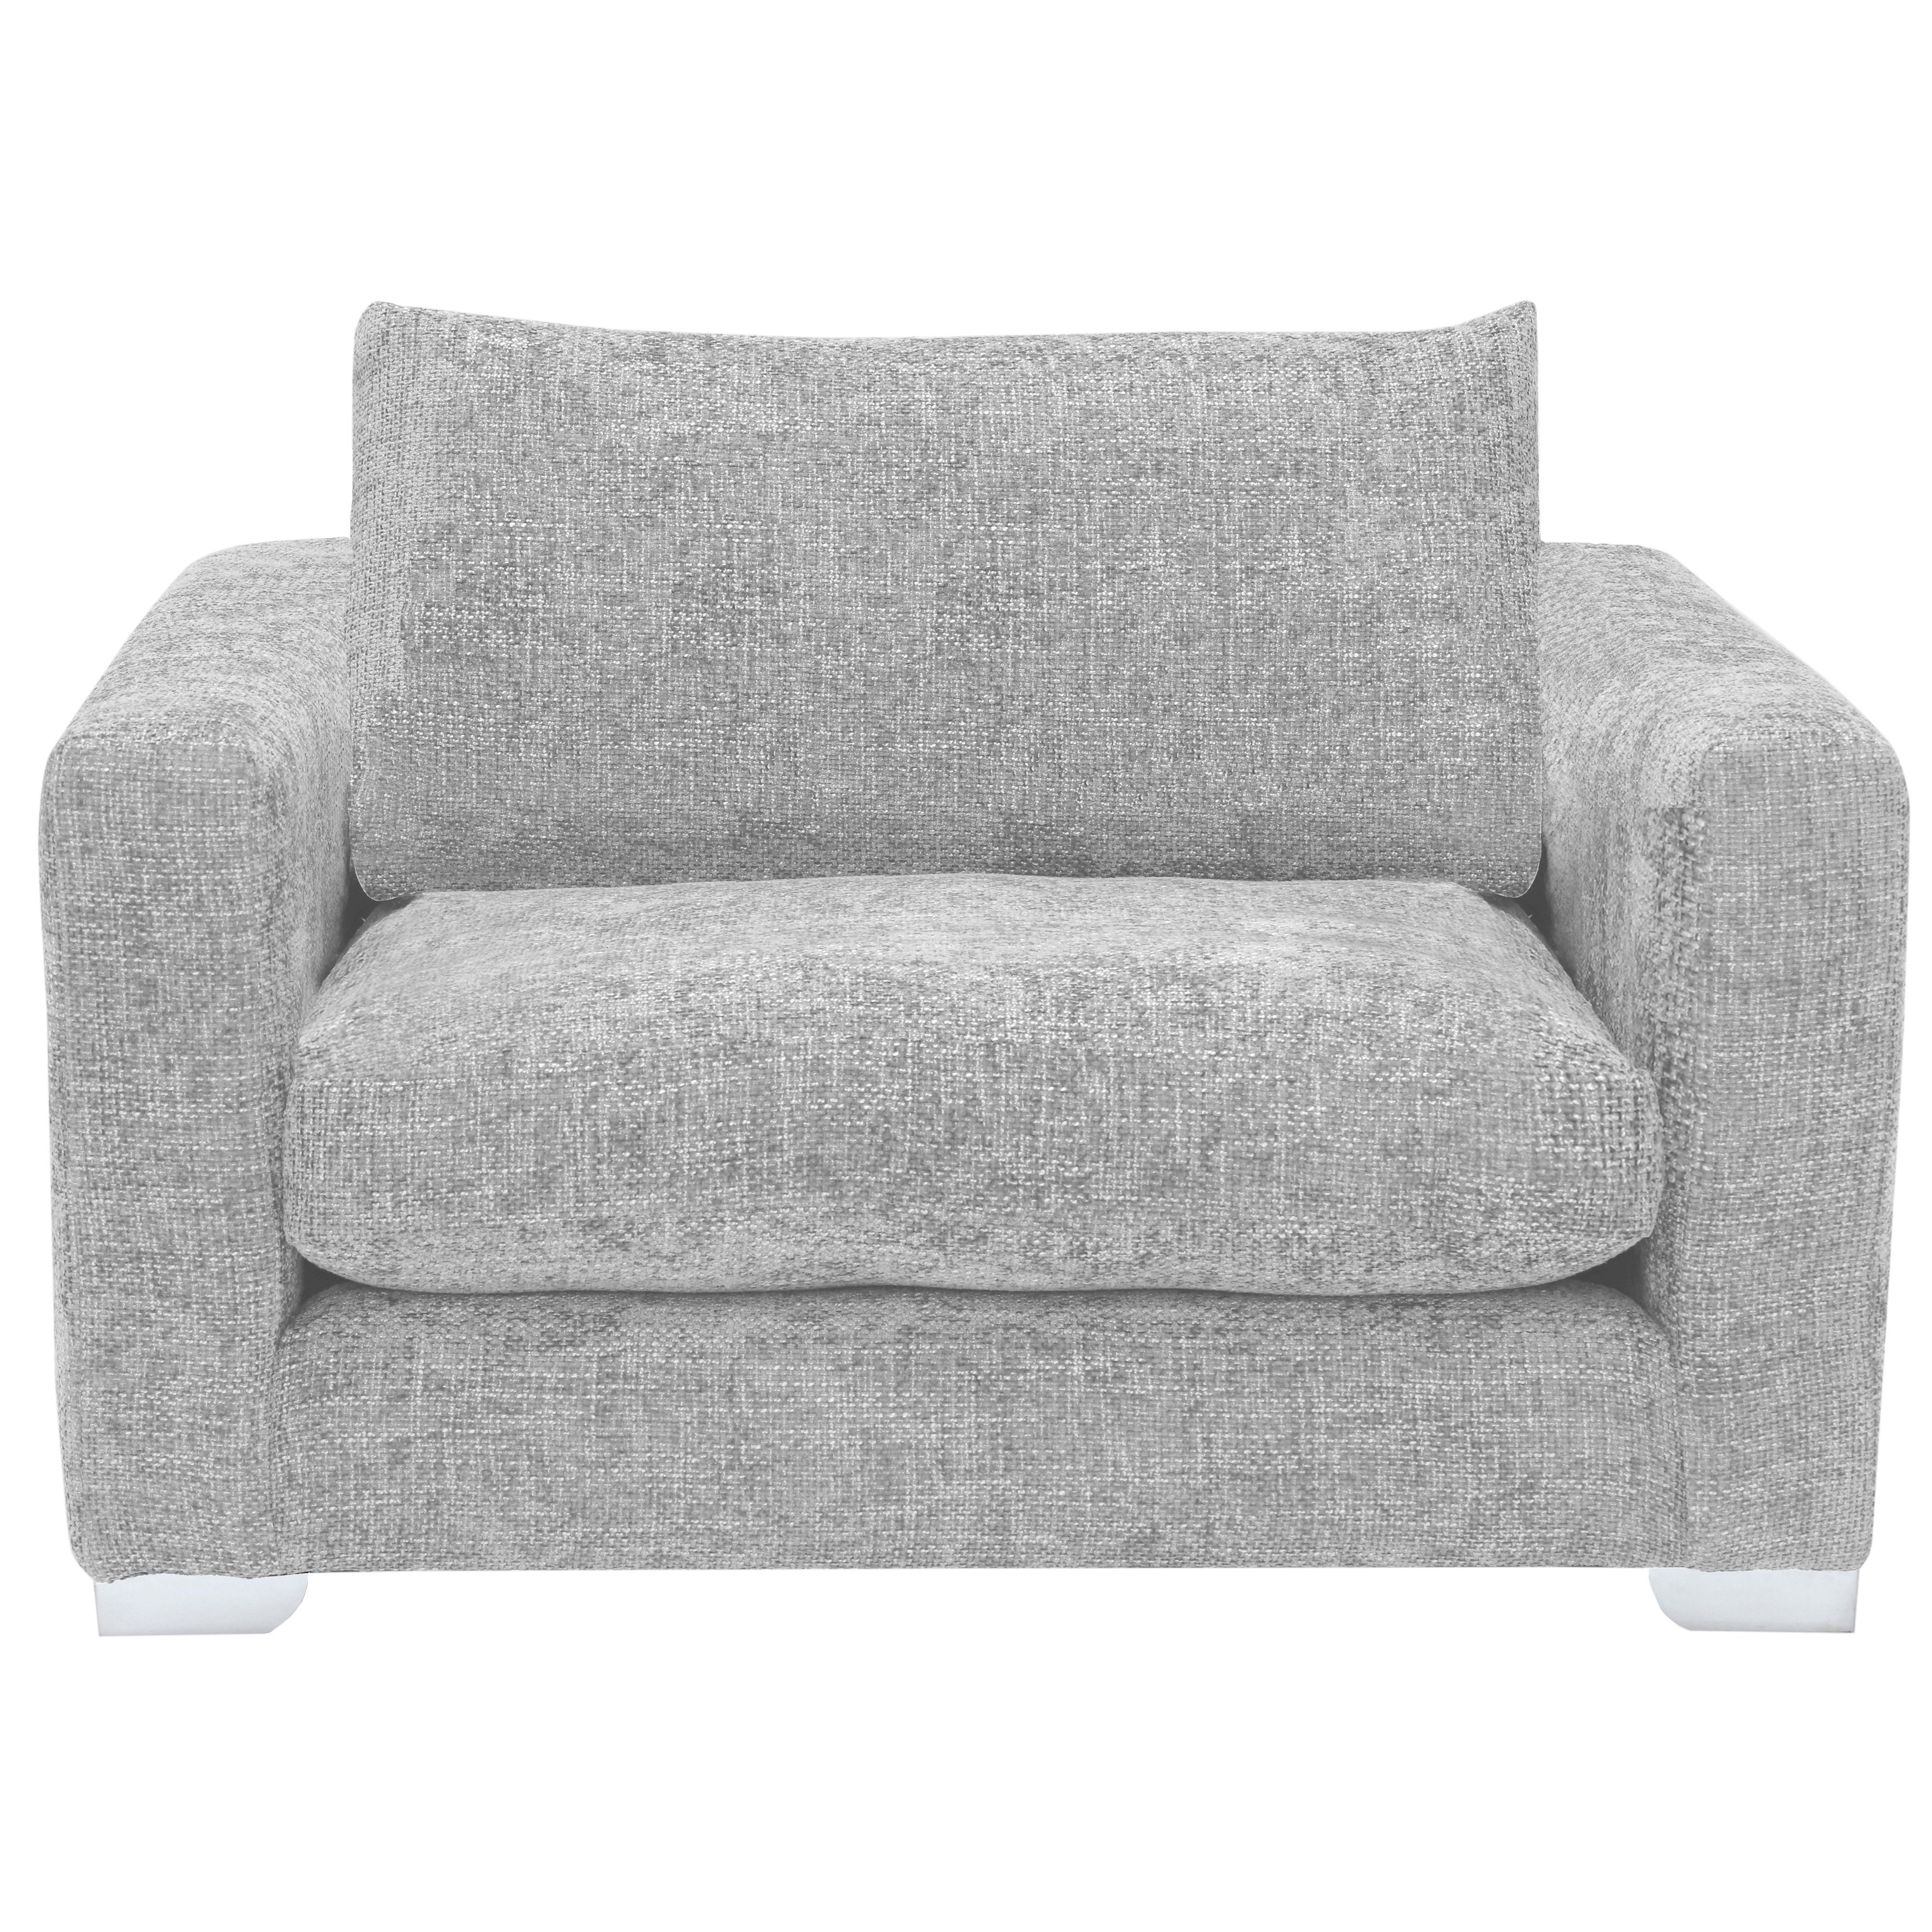 Fontella Snuggler Snuggle Chair, Grey Fabric | Barker & Stonehouse